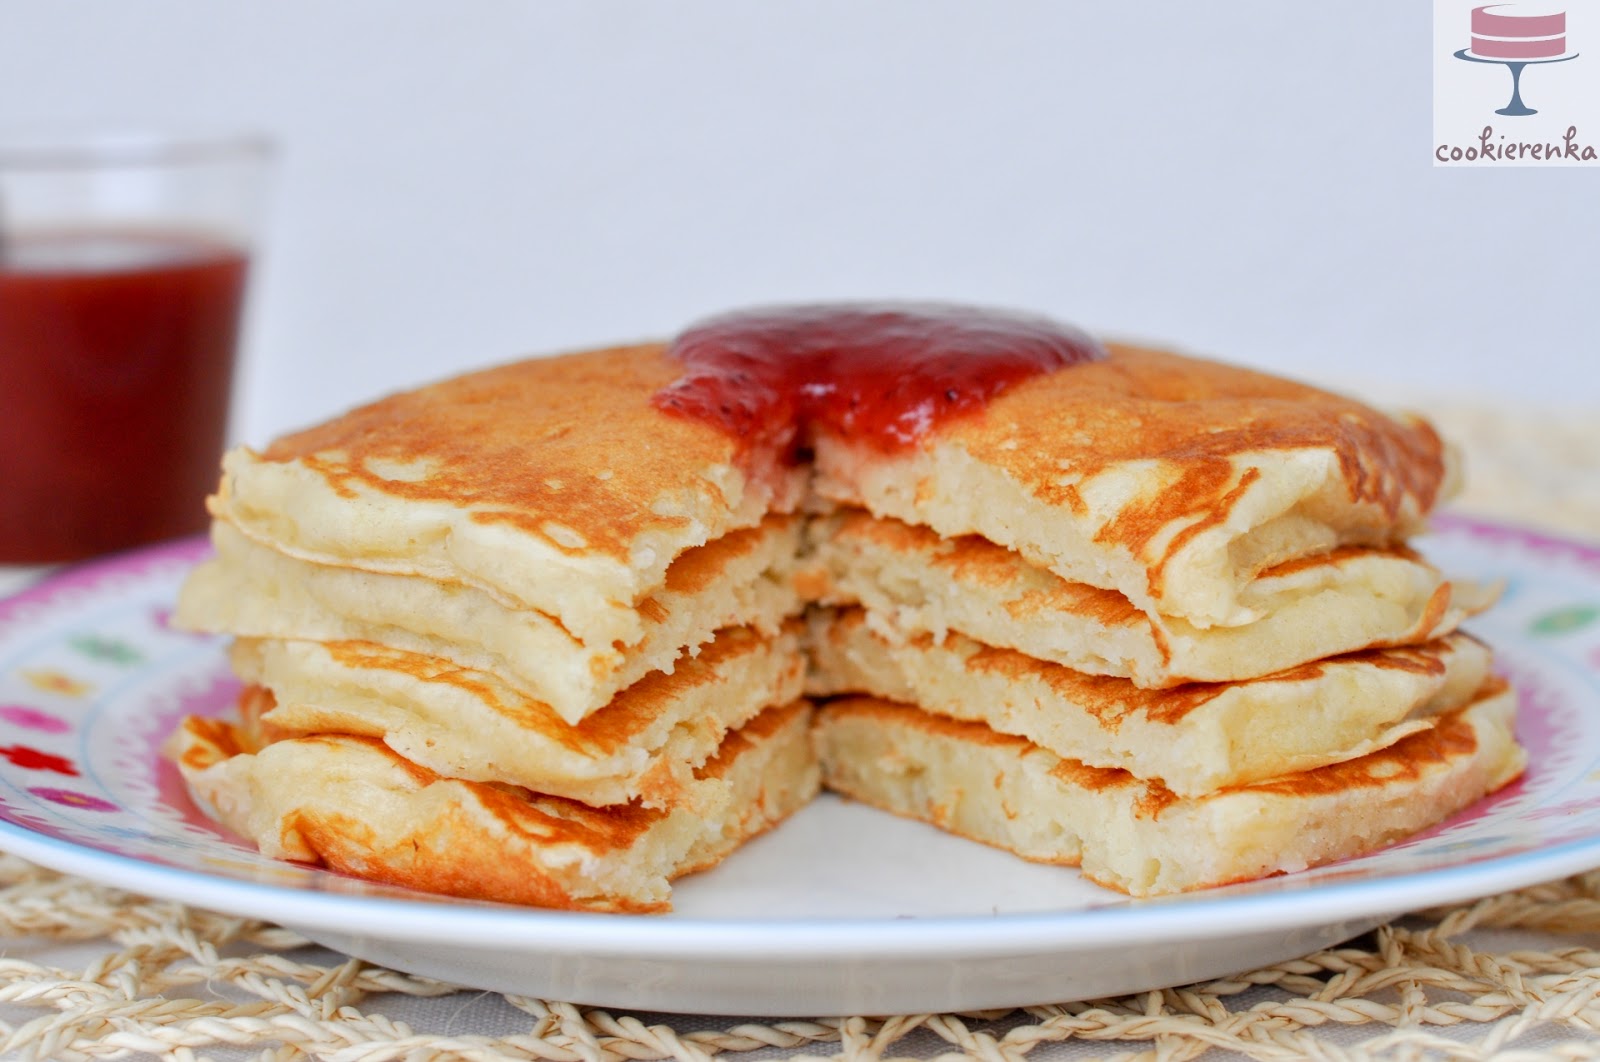 http://www.cookierenka.com/2014/02/pancakes-maslankowe-ii.html